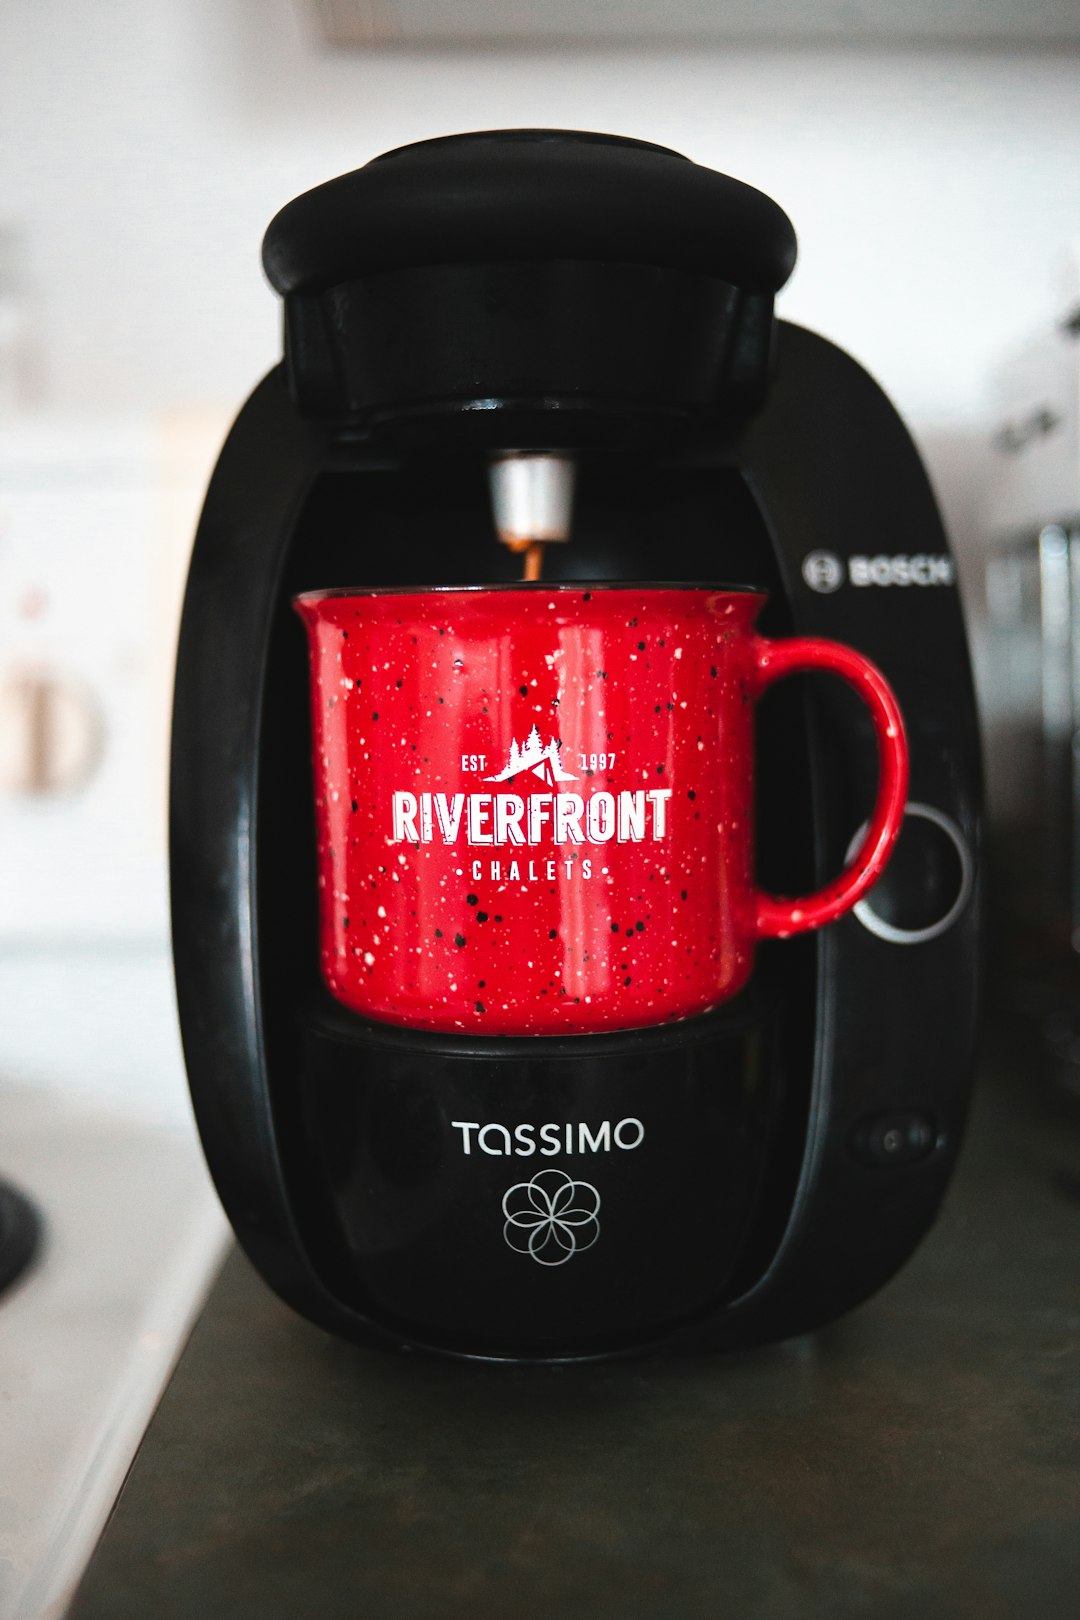 black Tassimo coffeemaker and red mug on black surface